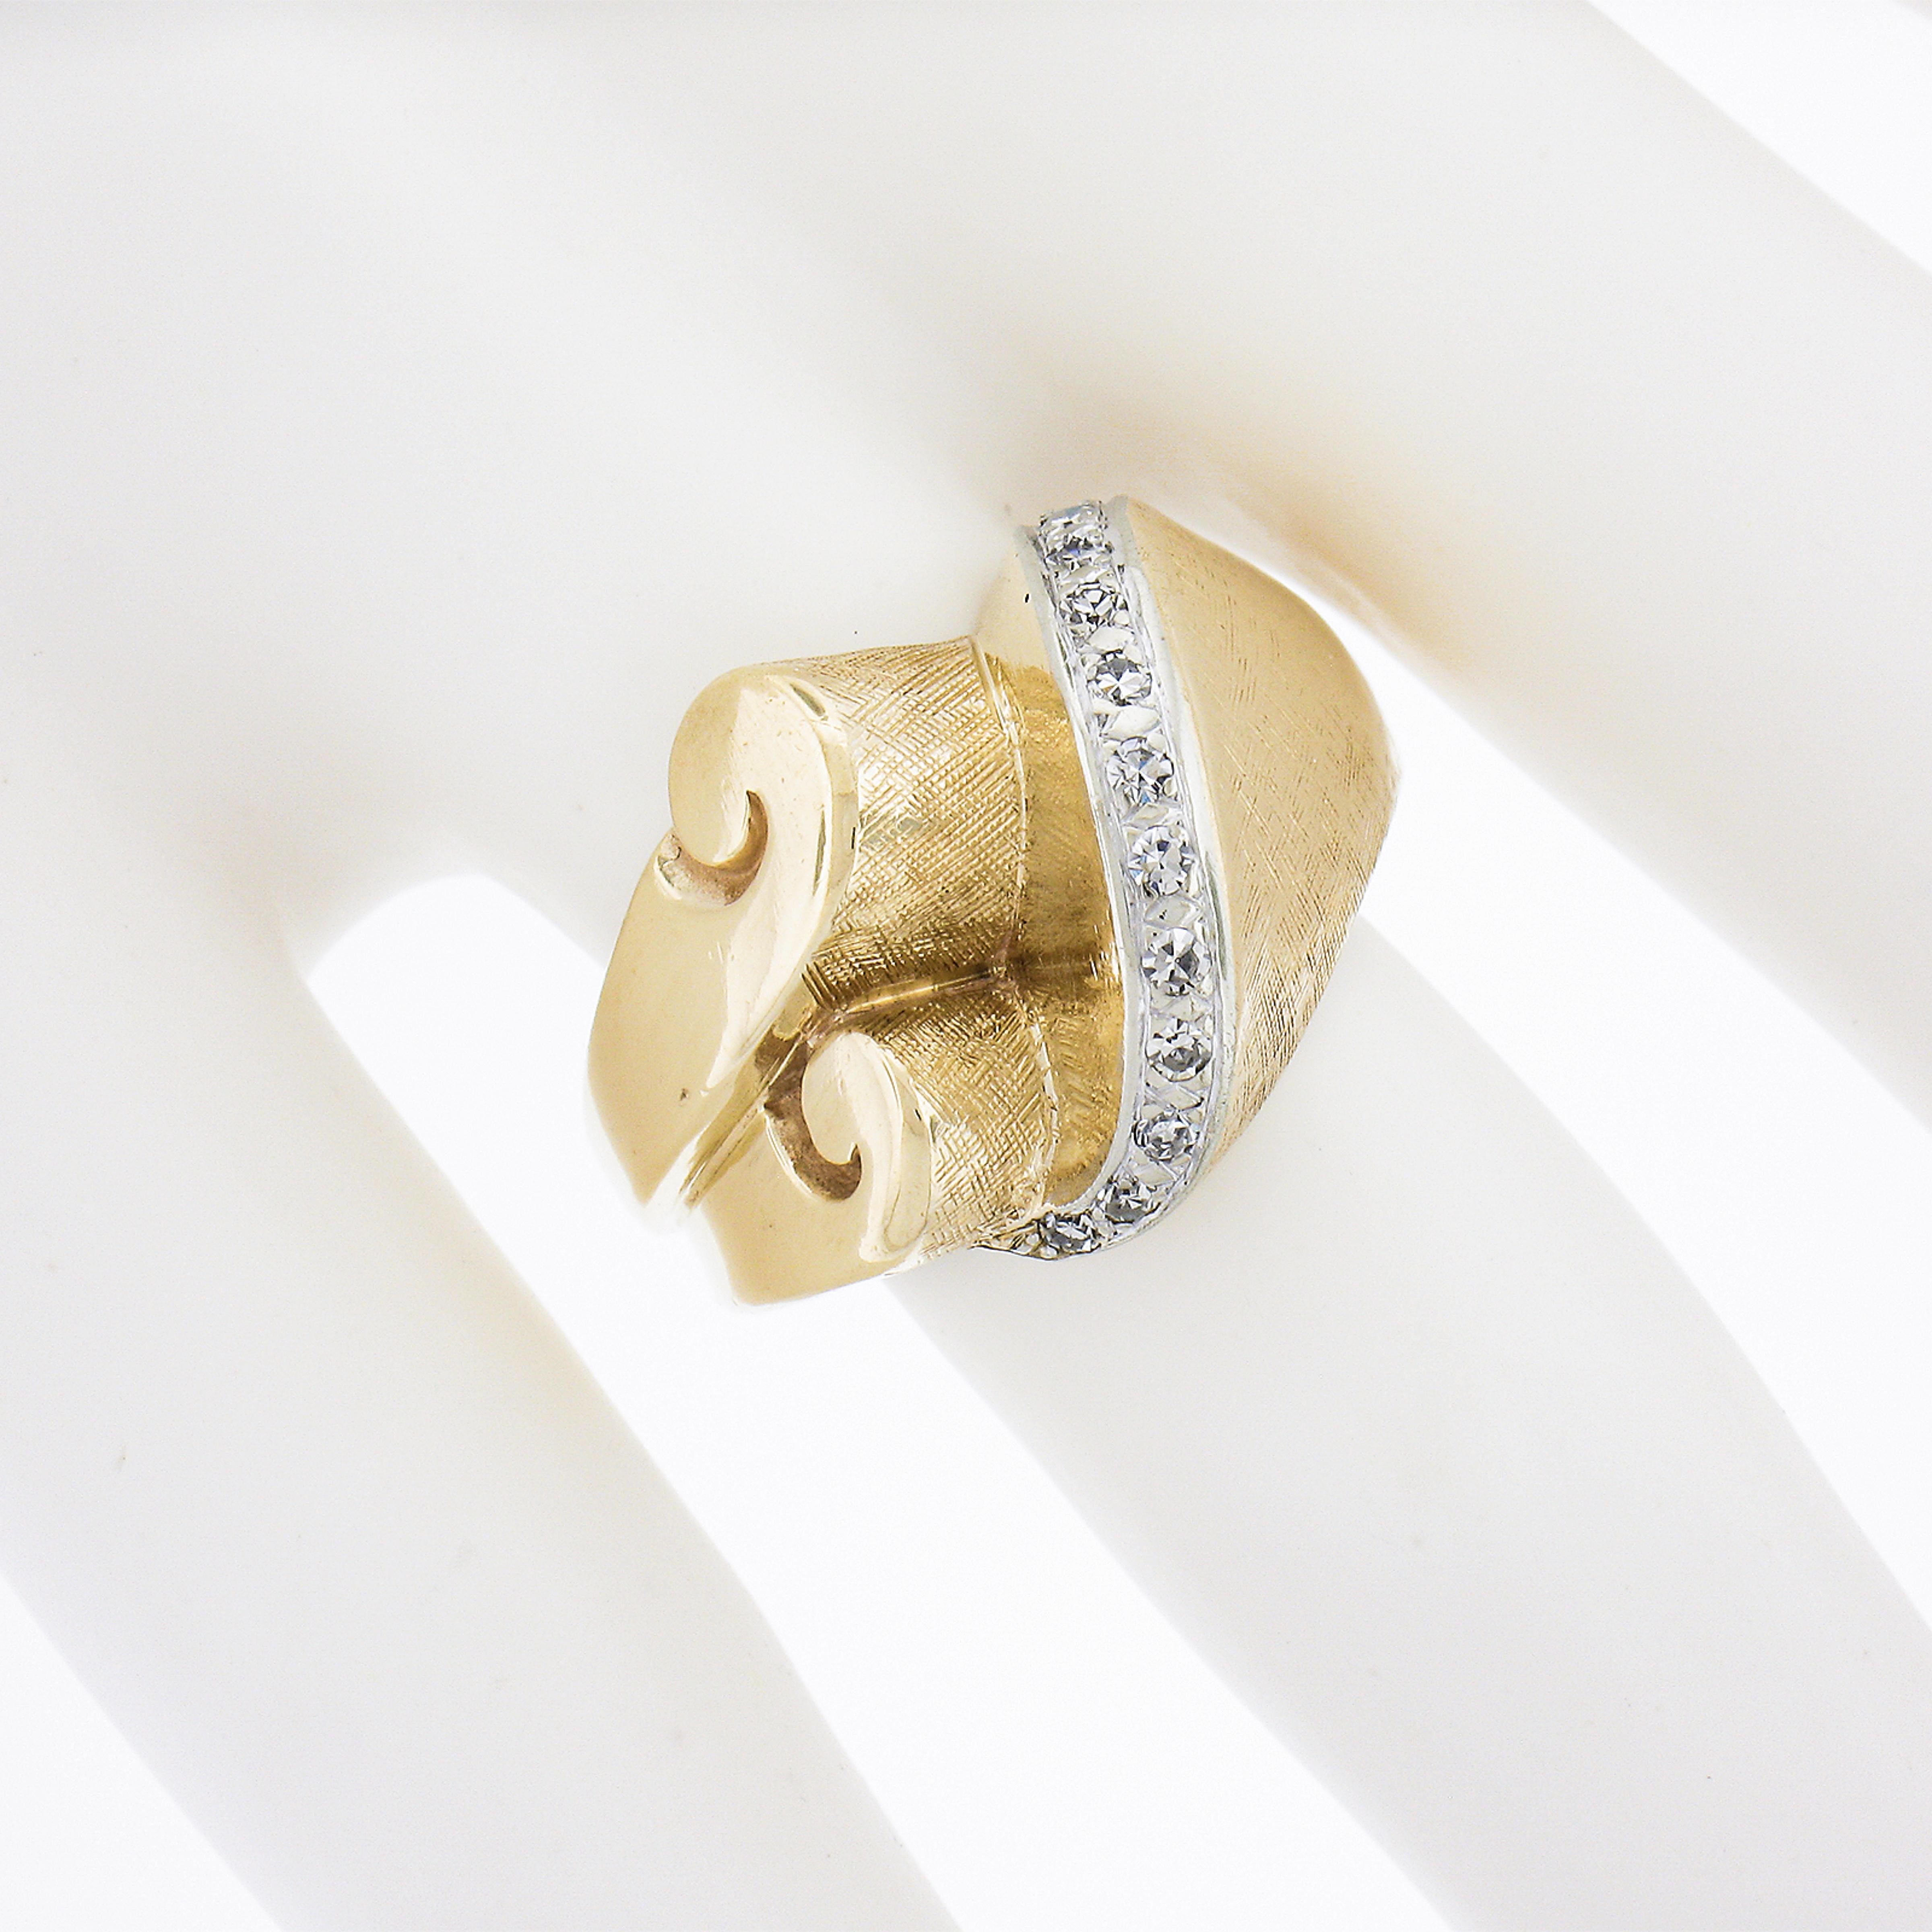 Vintage 14k TT Gold Diamond Florentine & Polished Finish Cocktail Statement Ring In Excellent Condition For Sale In Montclair, NJ